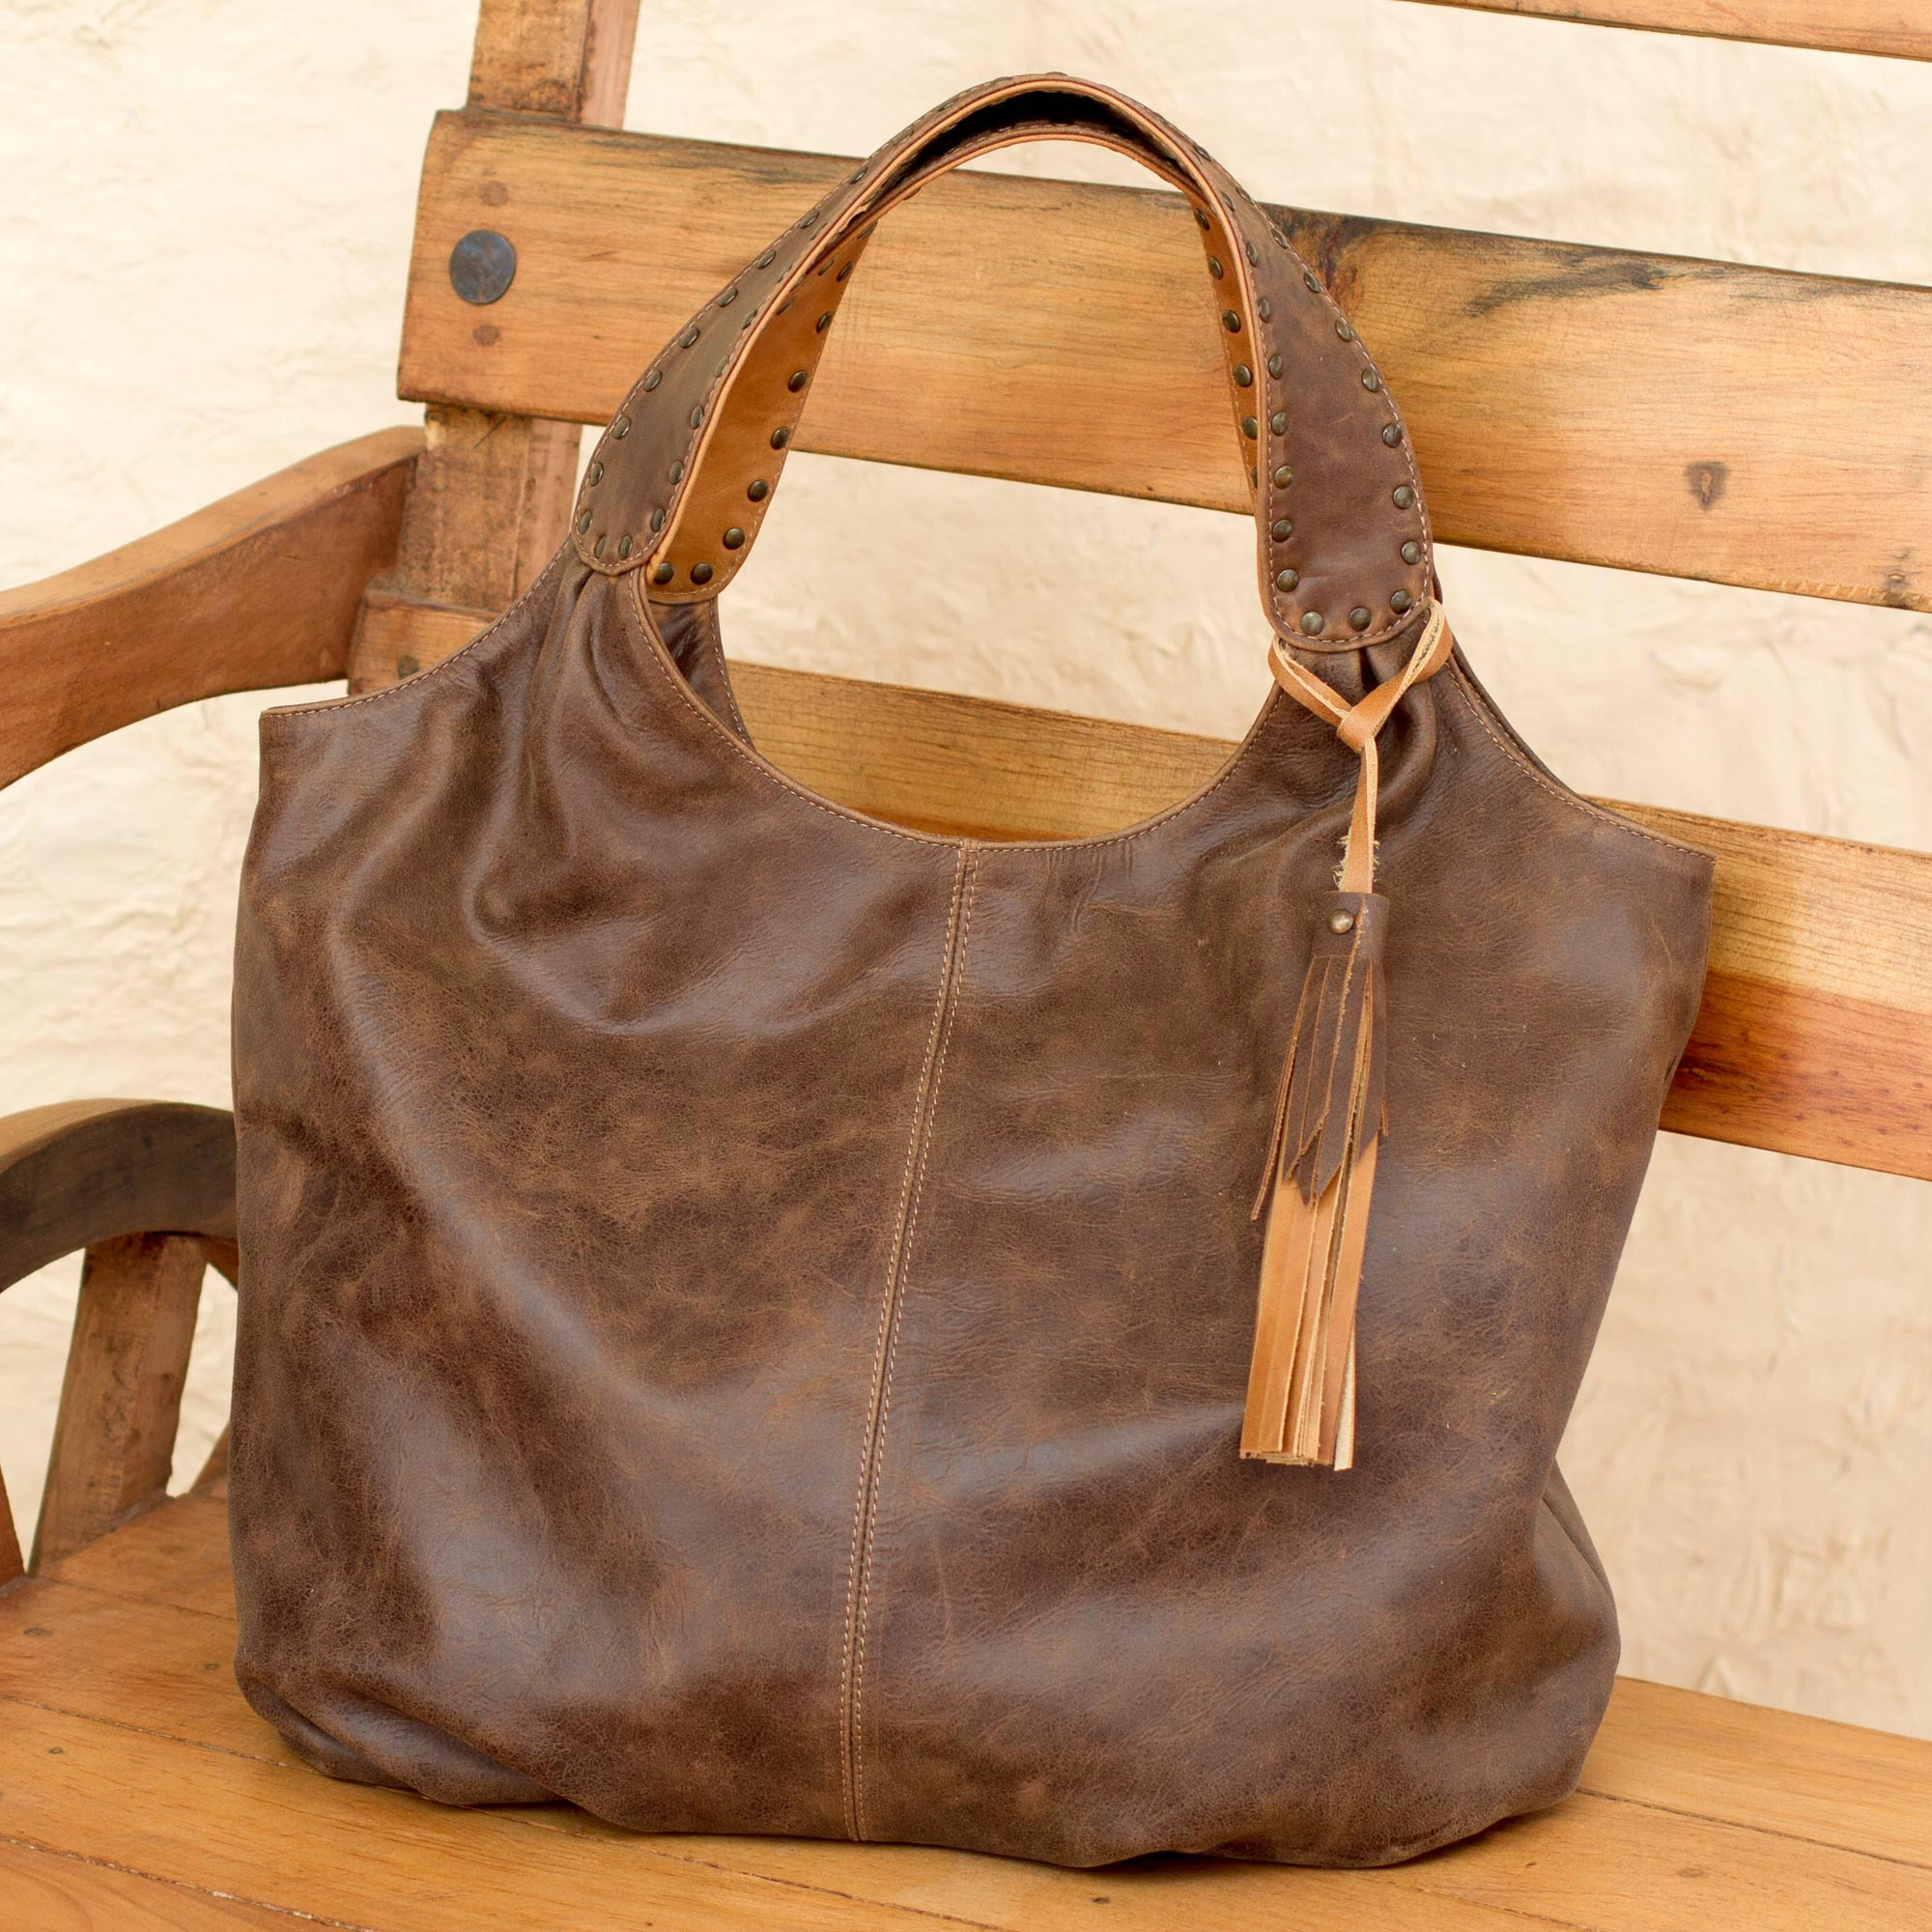 Buy Soye Women Handbags Hobo Bags Shoulder Tote Large Capacity PU Leather  Handbags (Tan) at Amazon.in